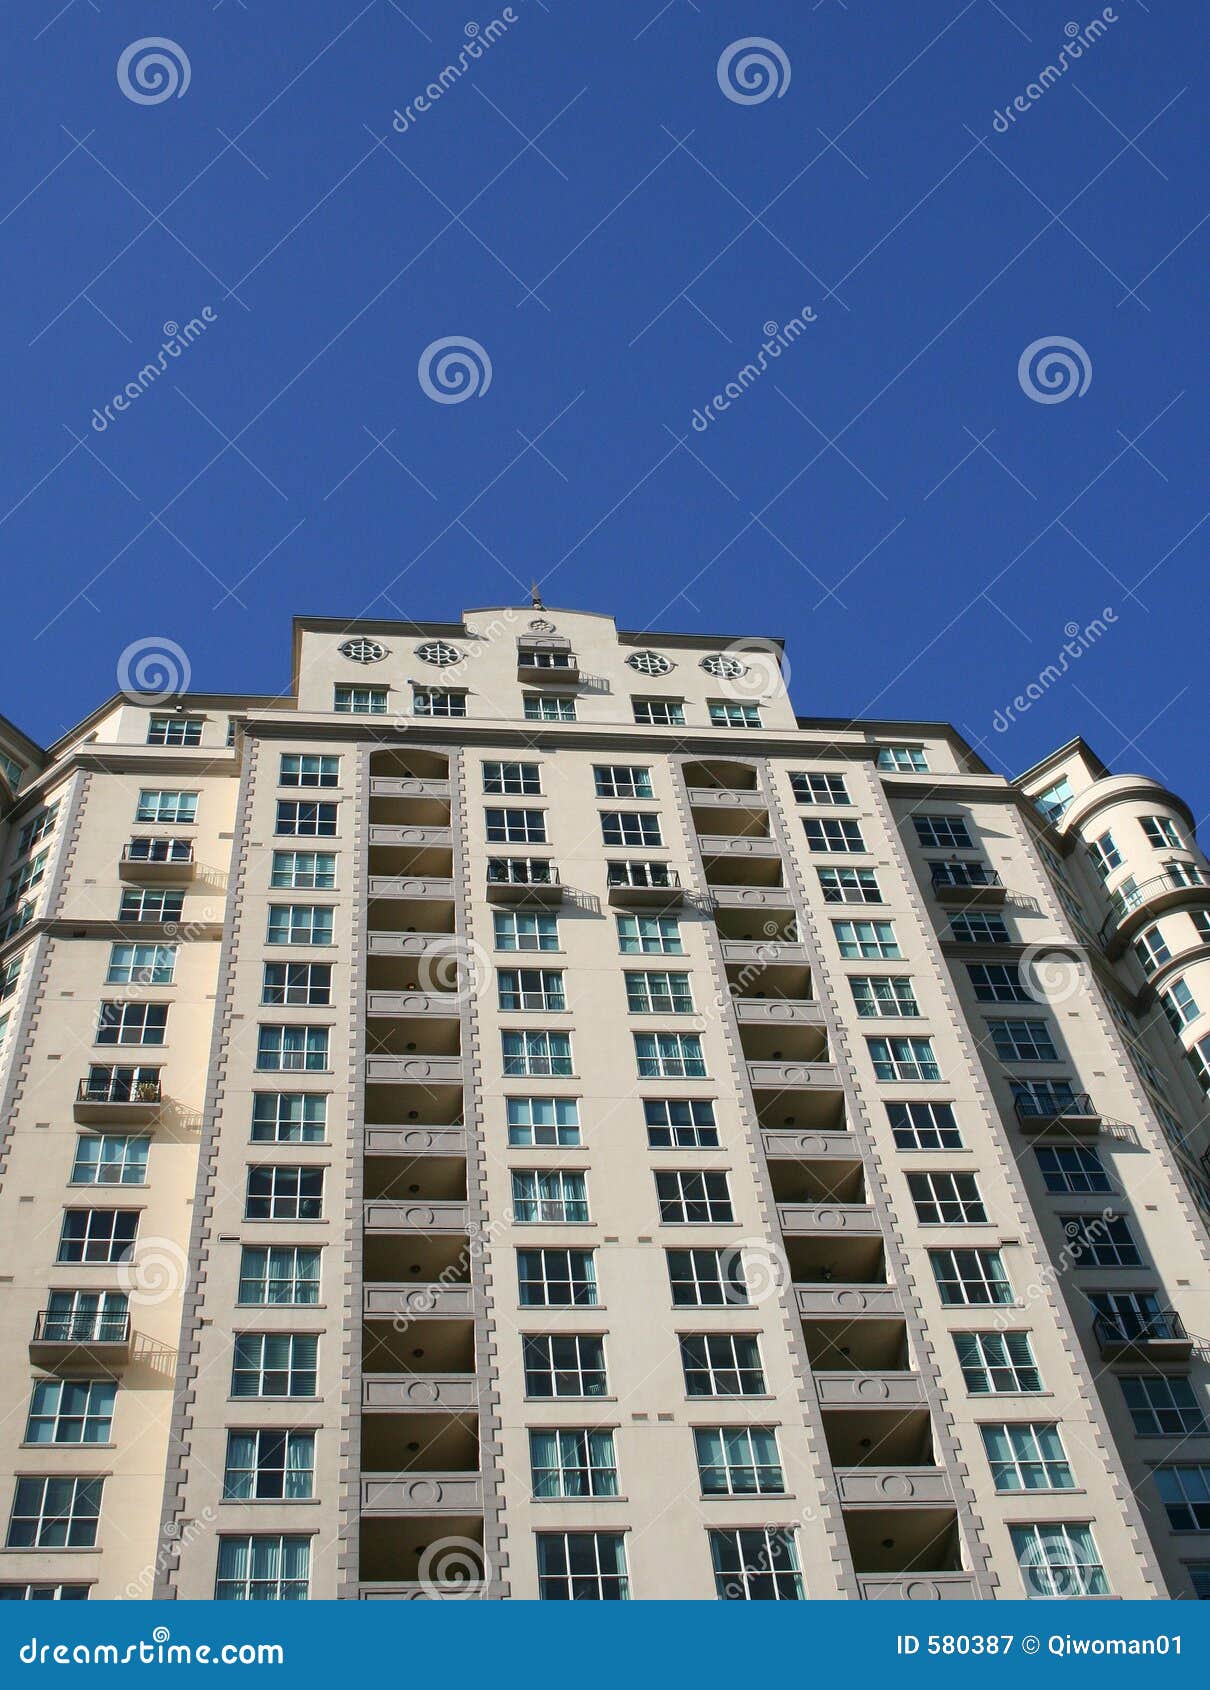 high-rise condominiums